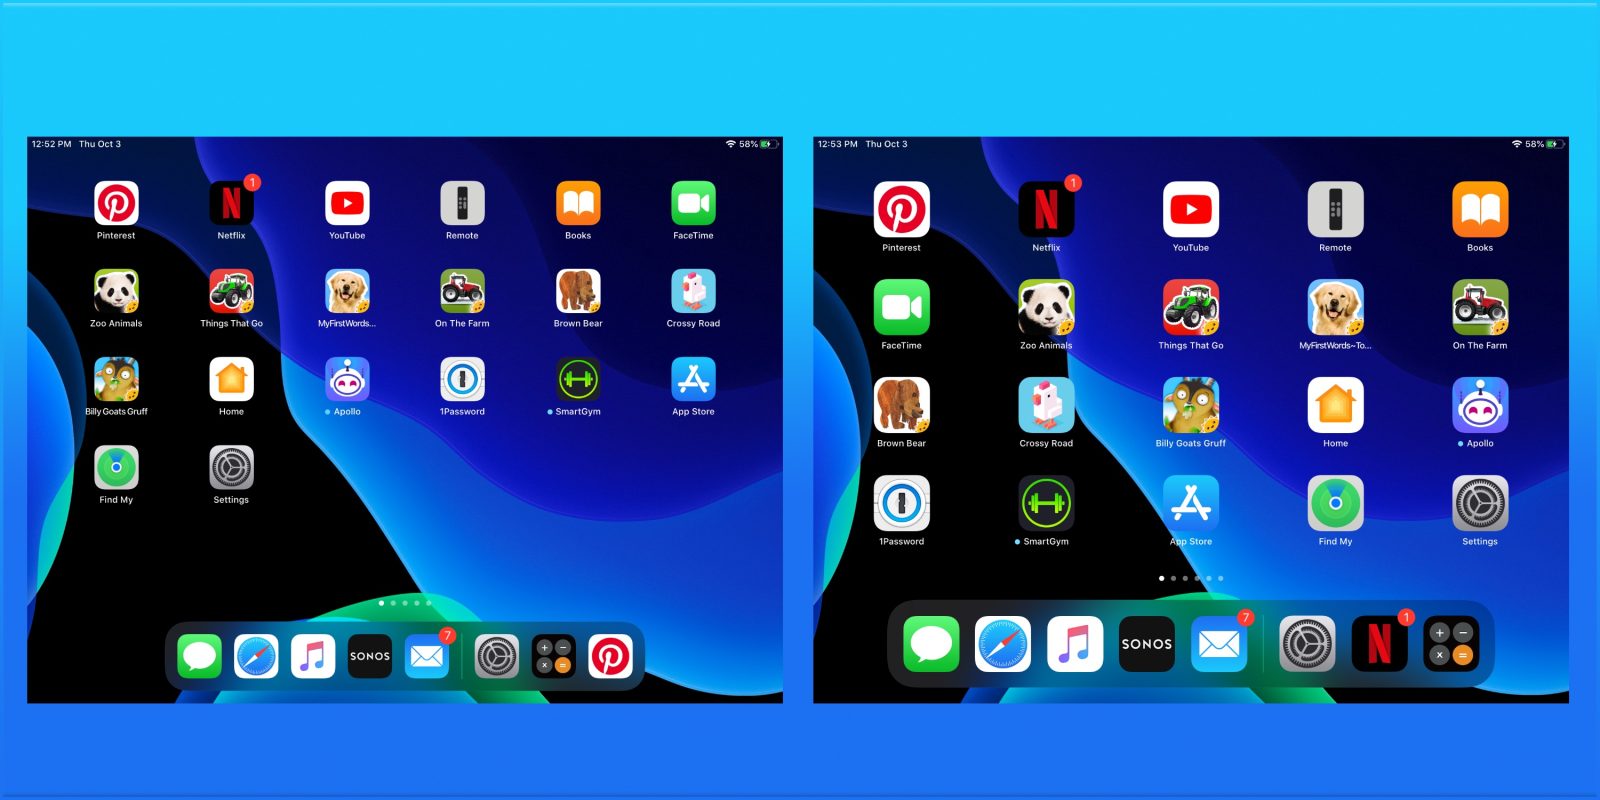 How to make iPad app icons bigger